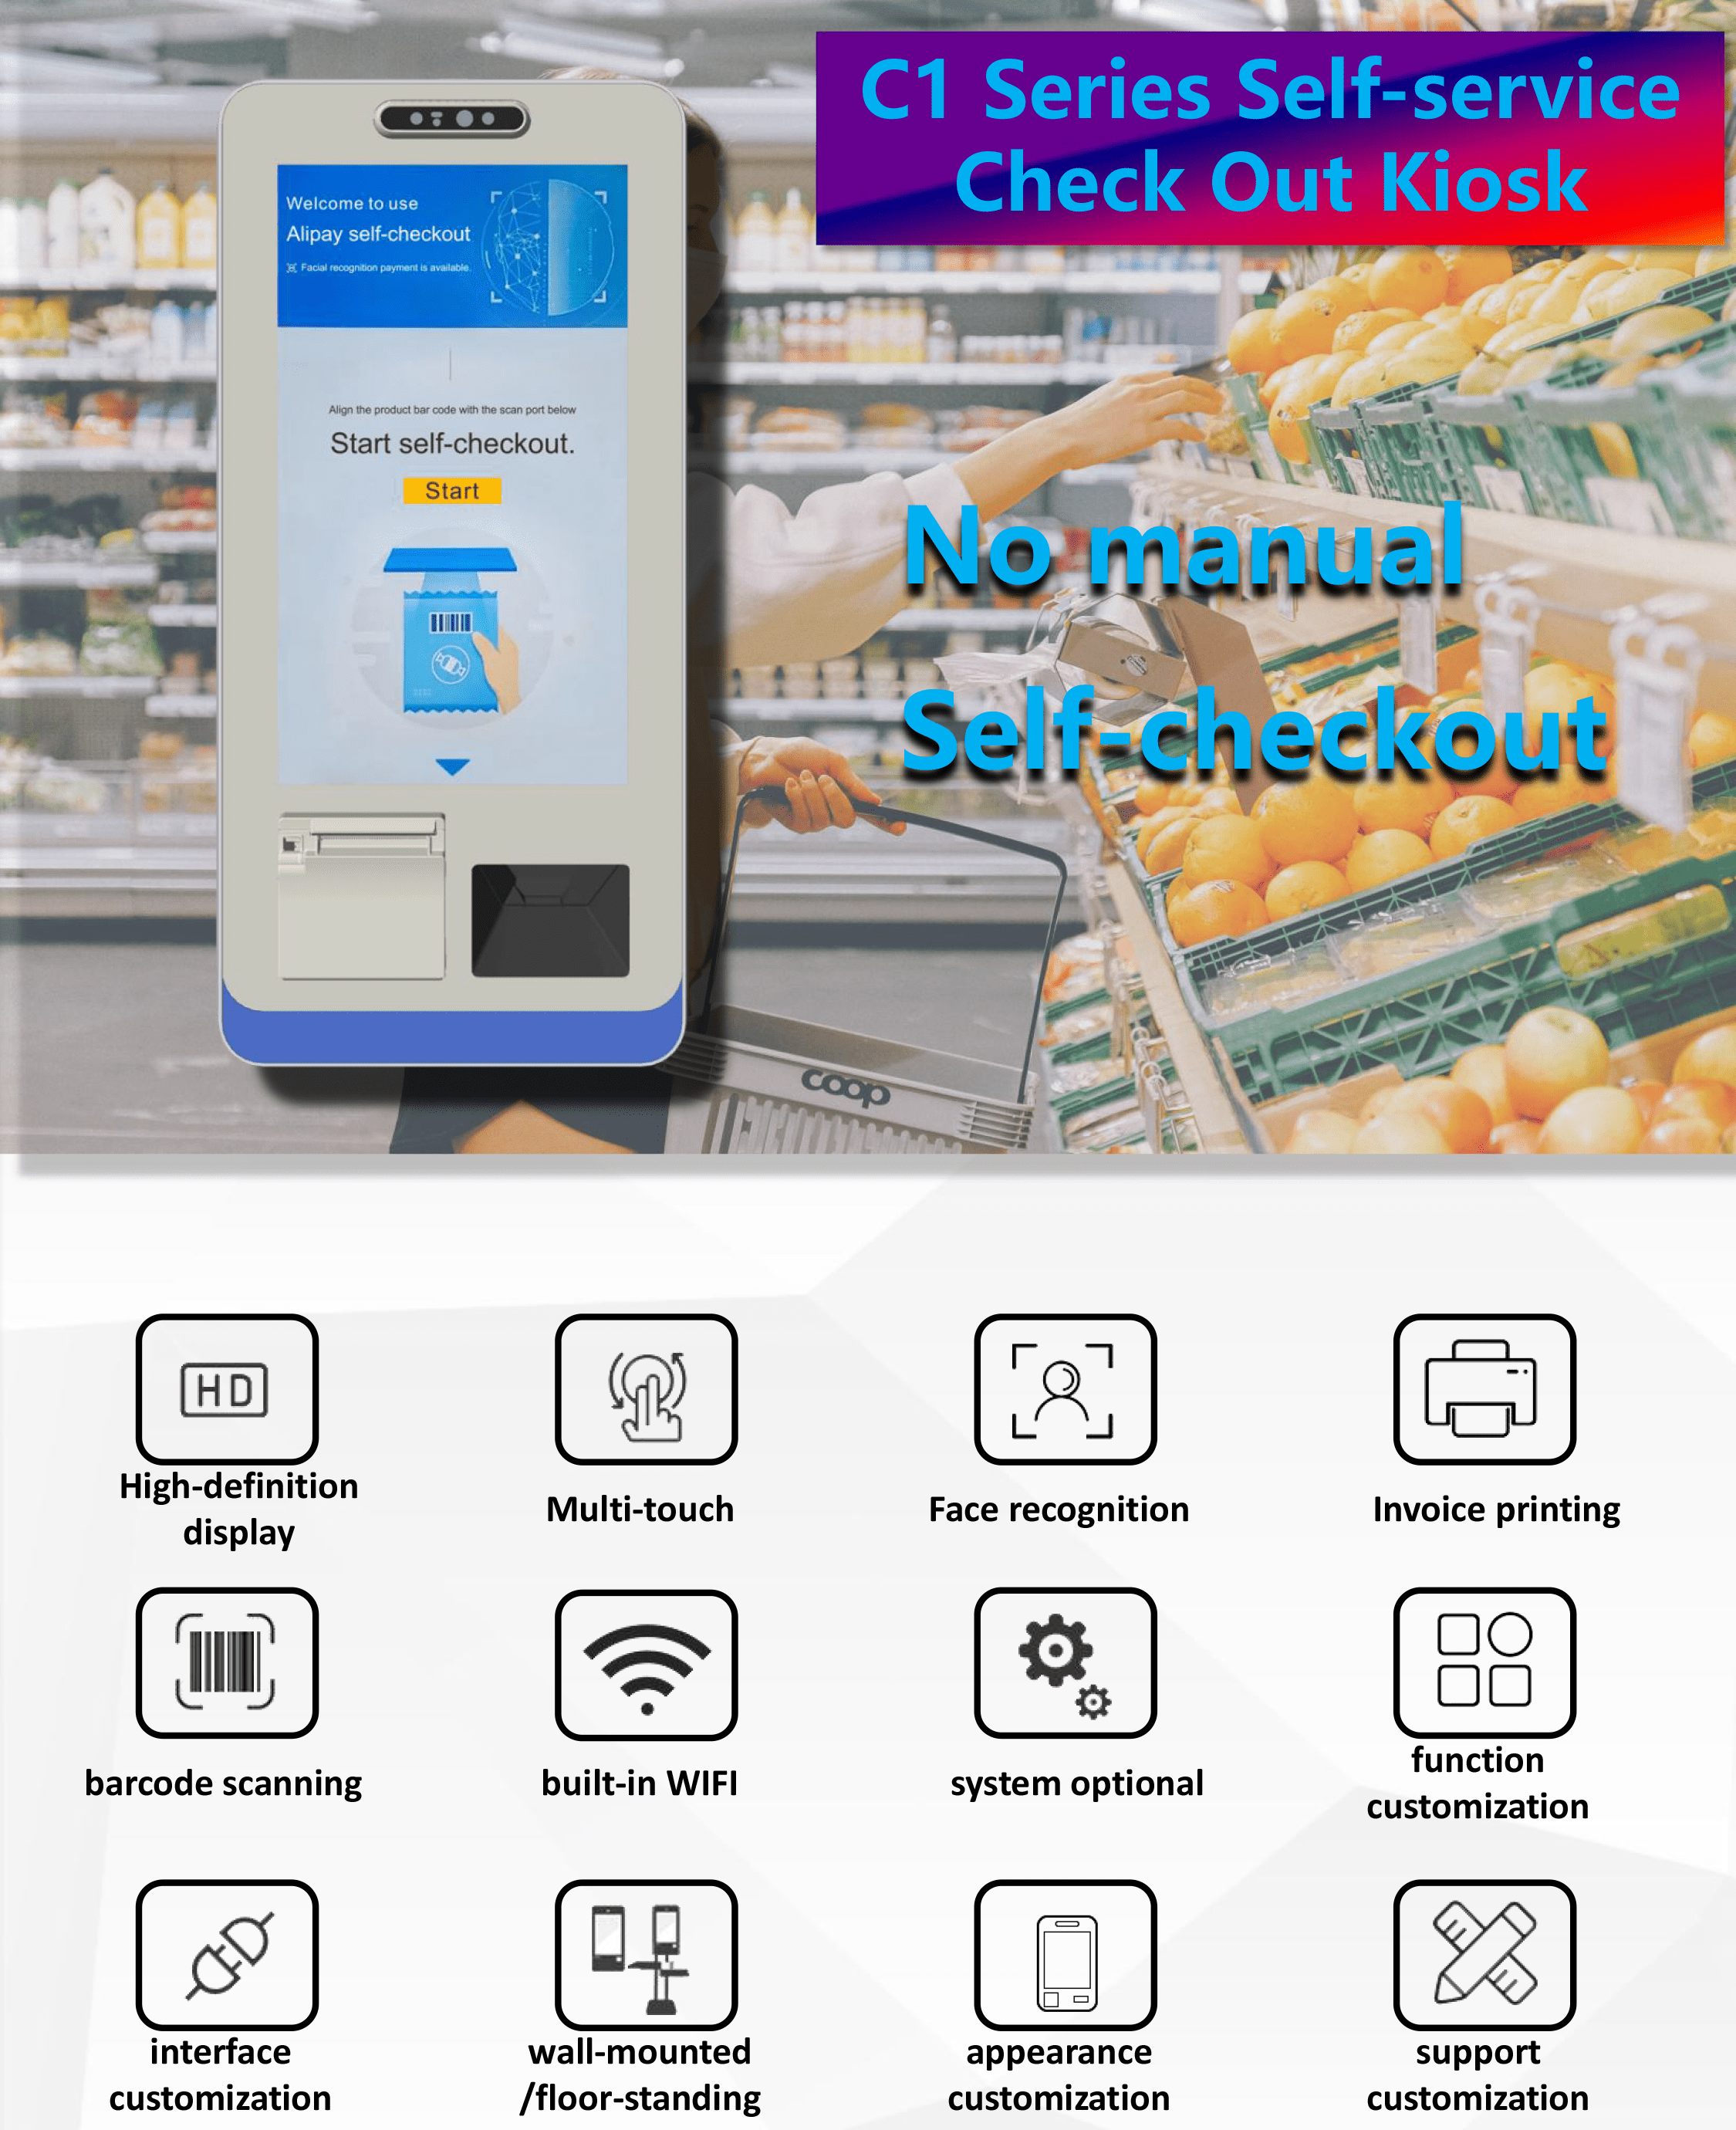 C1series Self-service Check Out Kiosk display